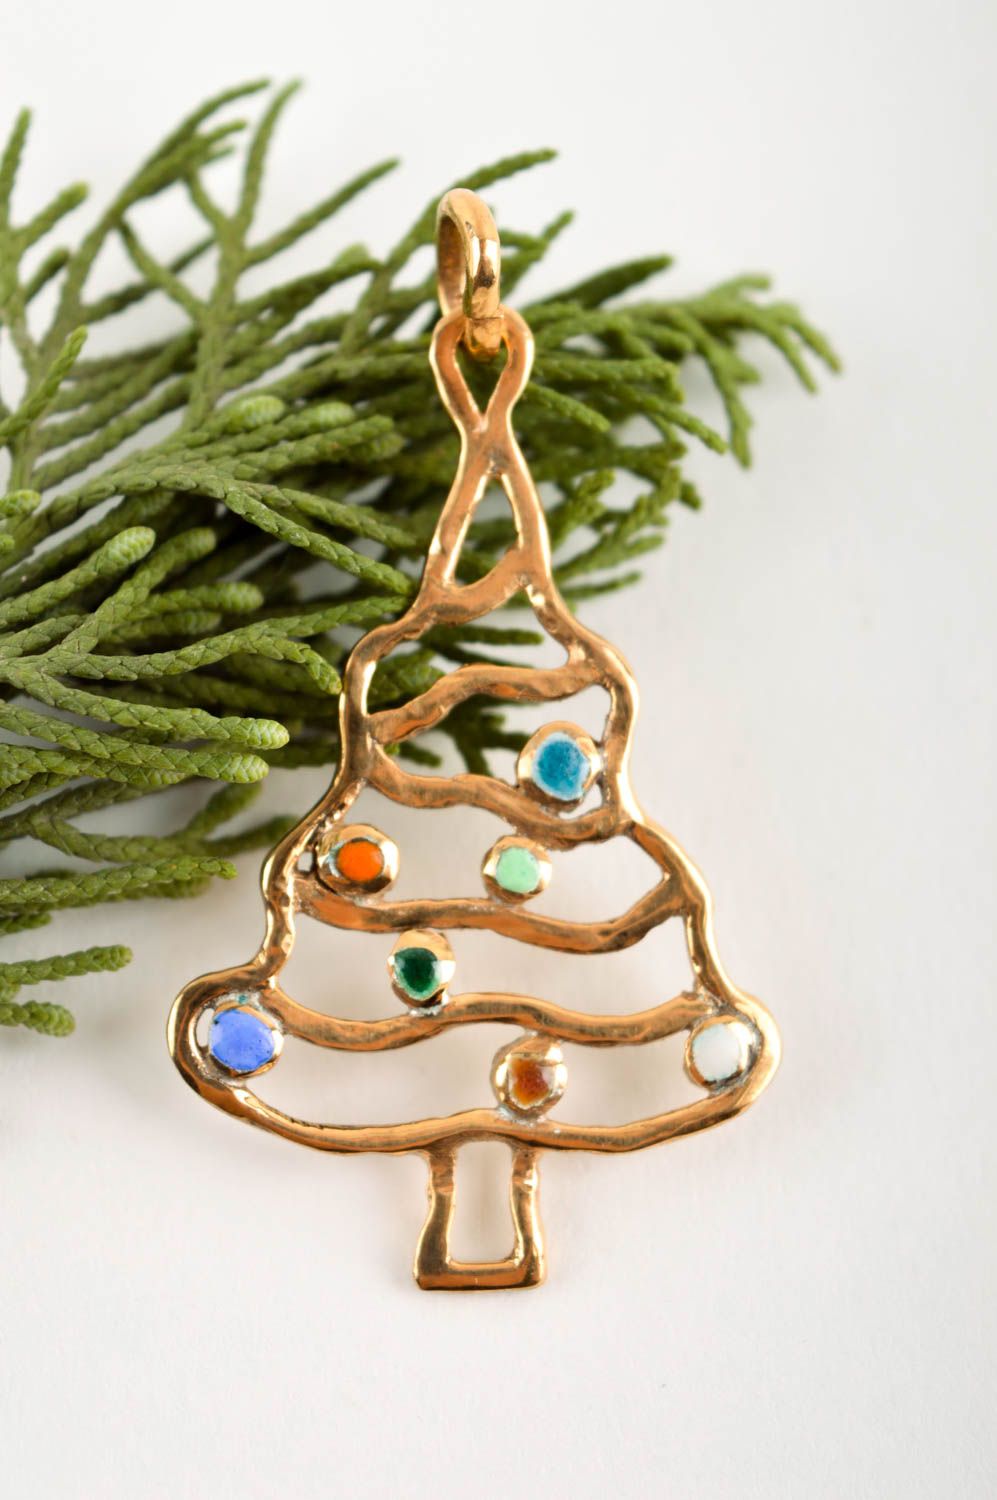 Homemade jewelry designer necklace pendant necklace Christmas gift ideas photo 1